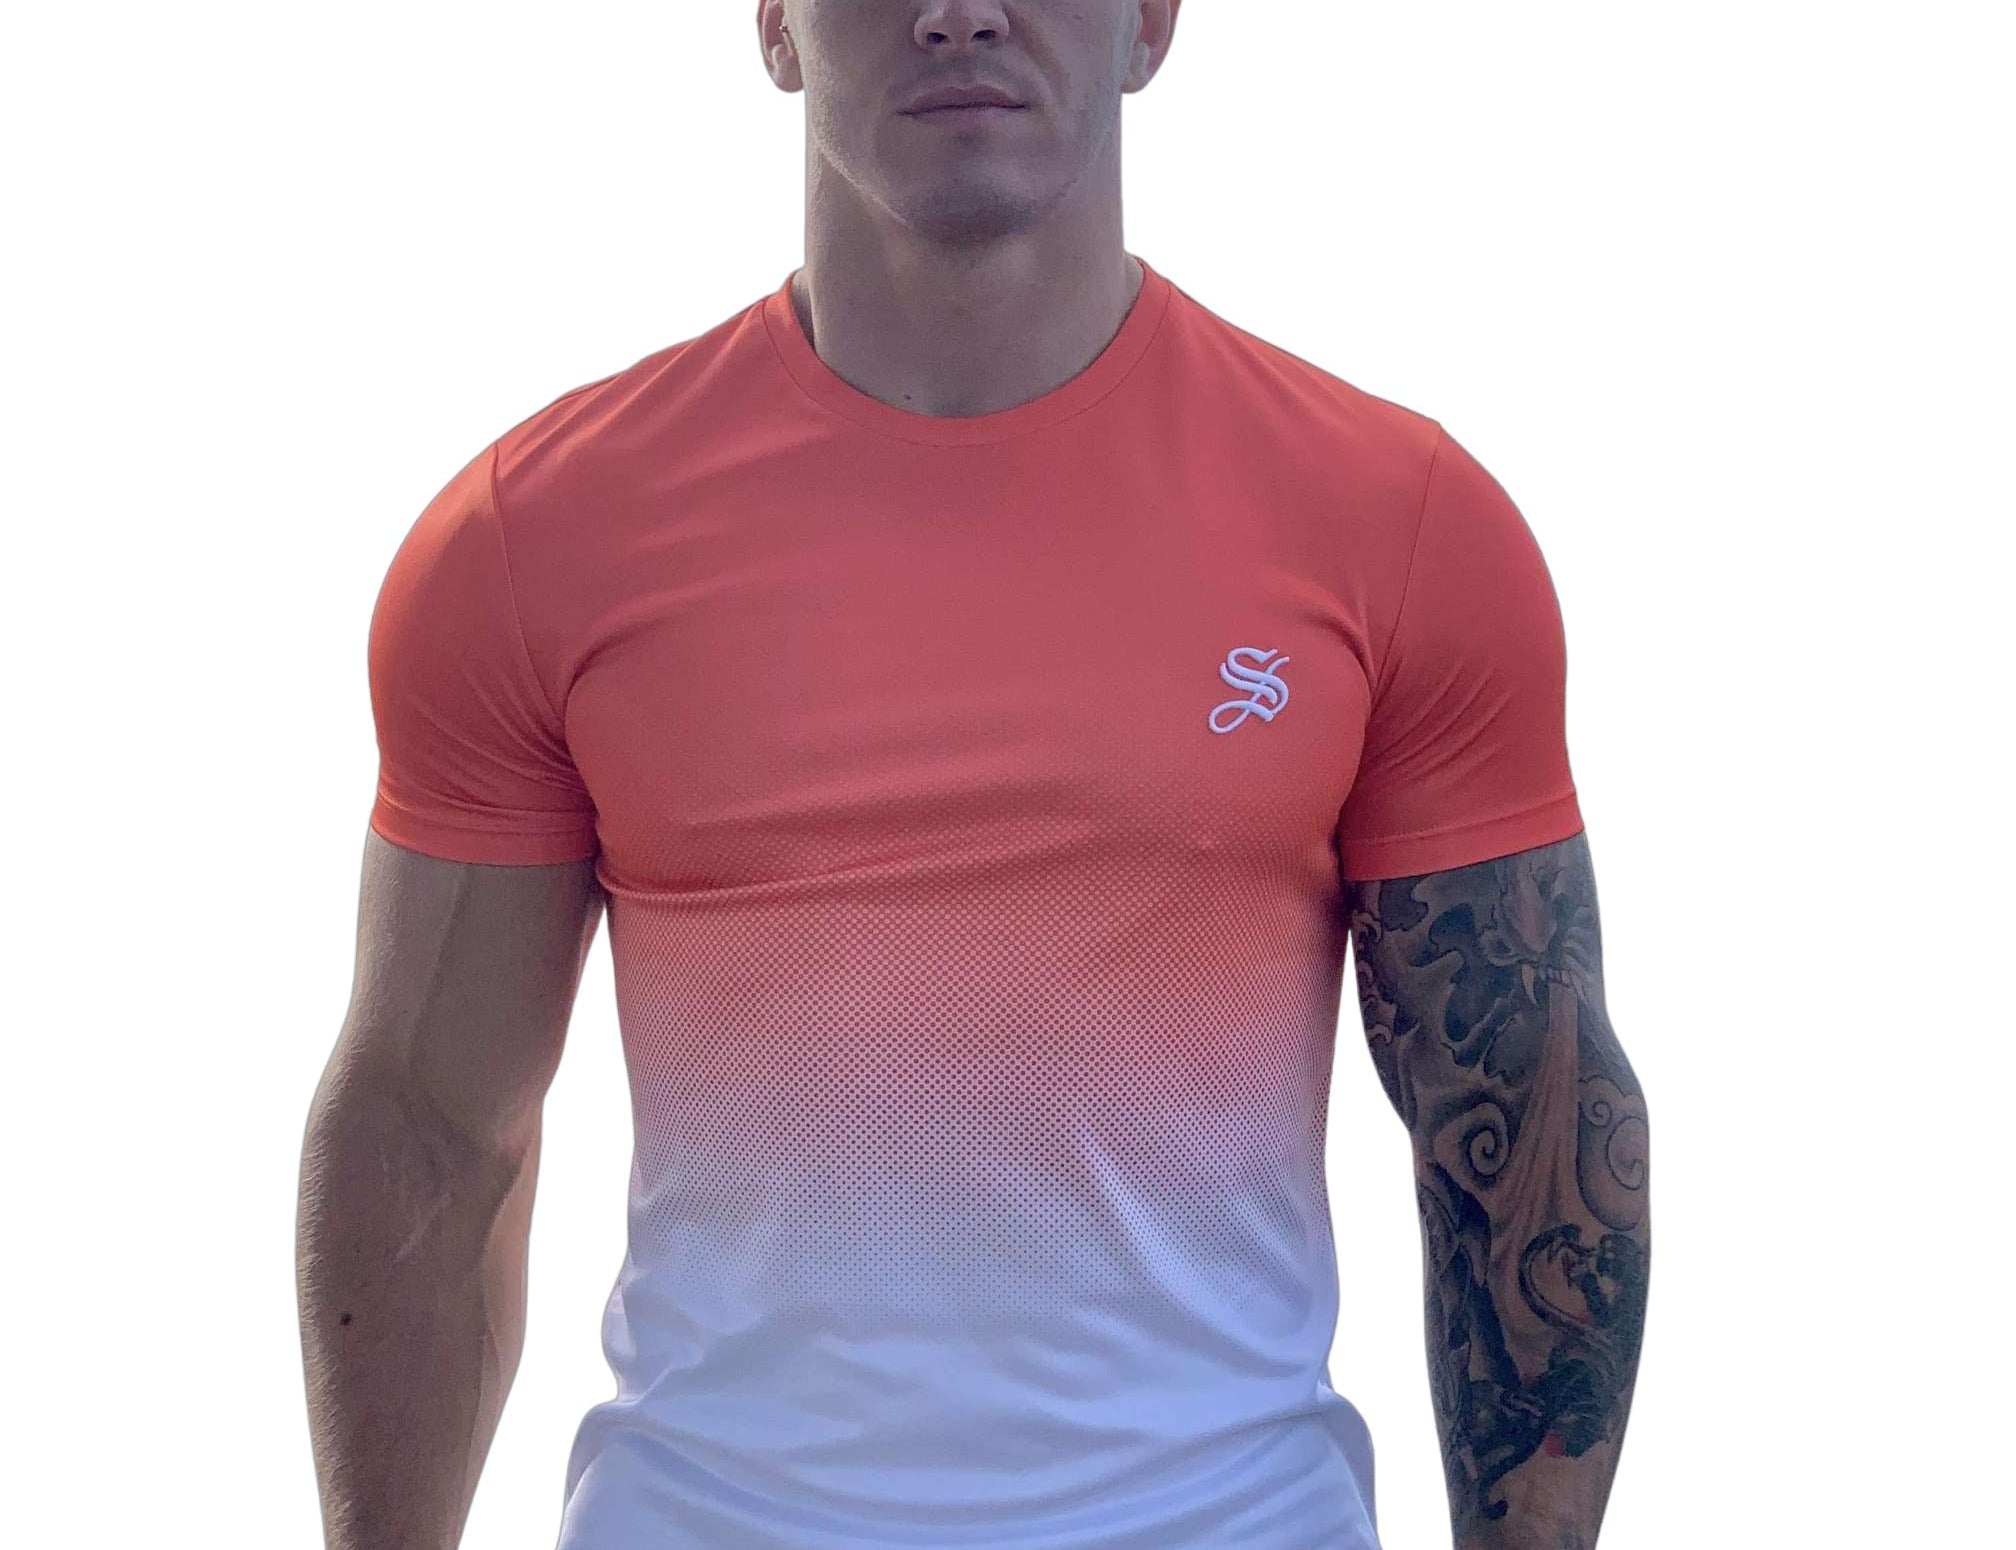 Fox - Orange T-shirt for Men - Sarman Fashion - Wholesale Clothing Fashion Brand for Men from Canada